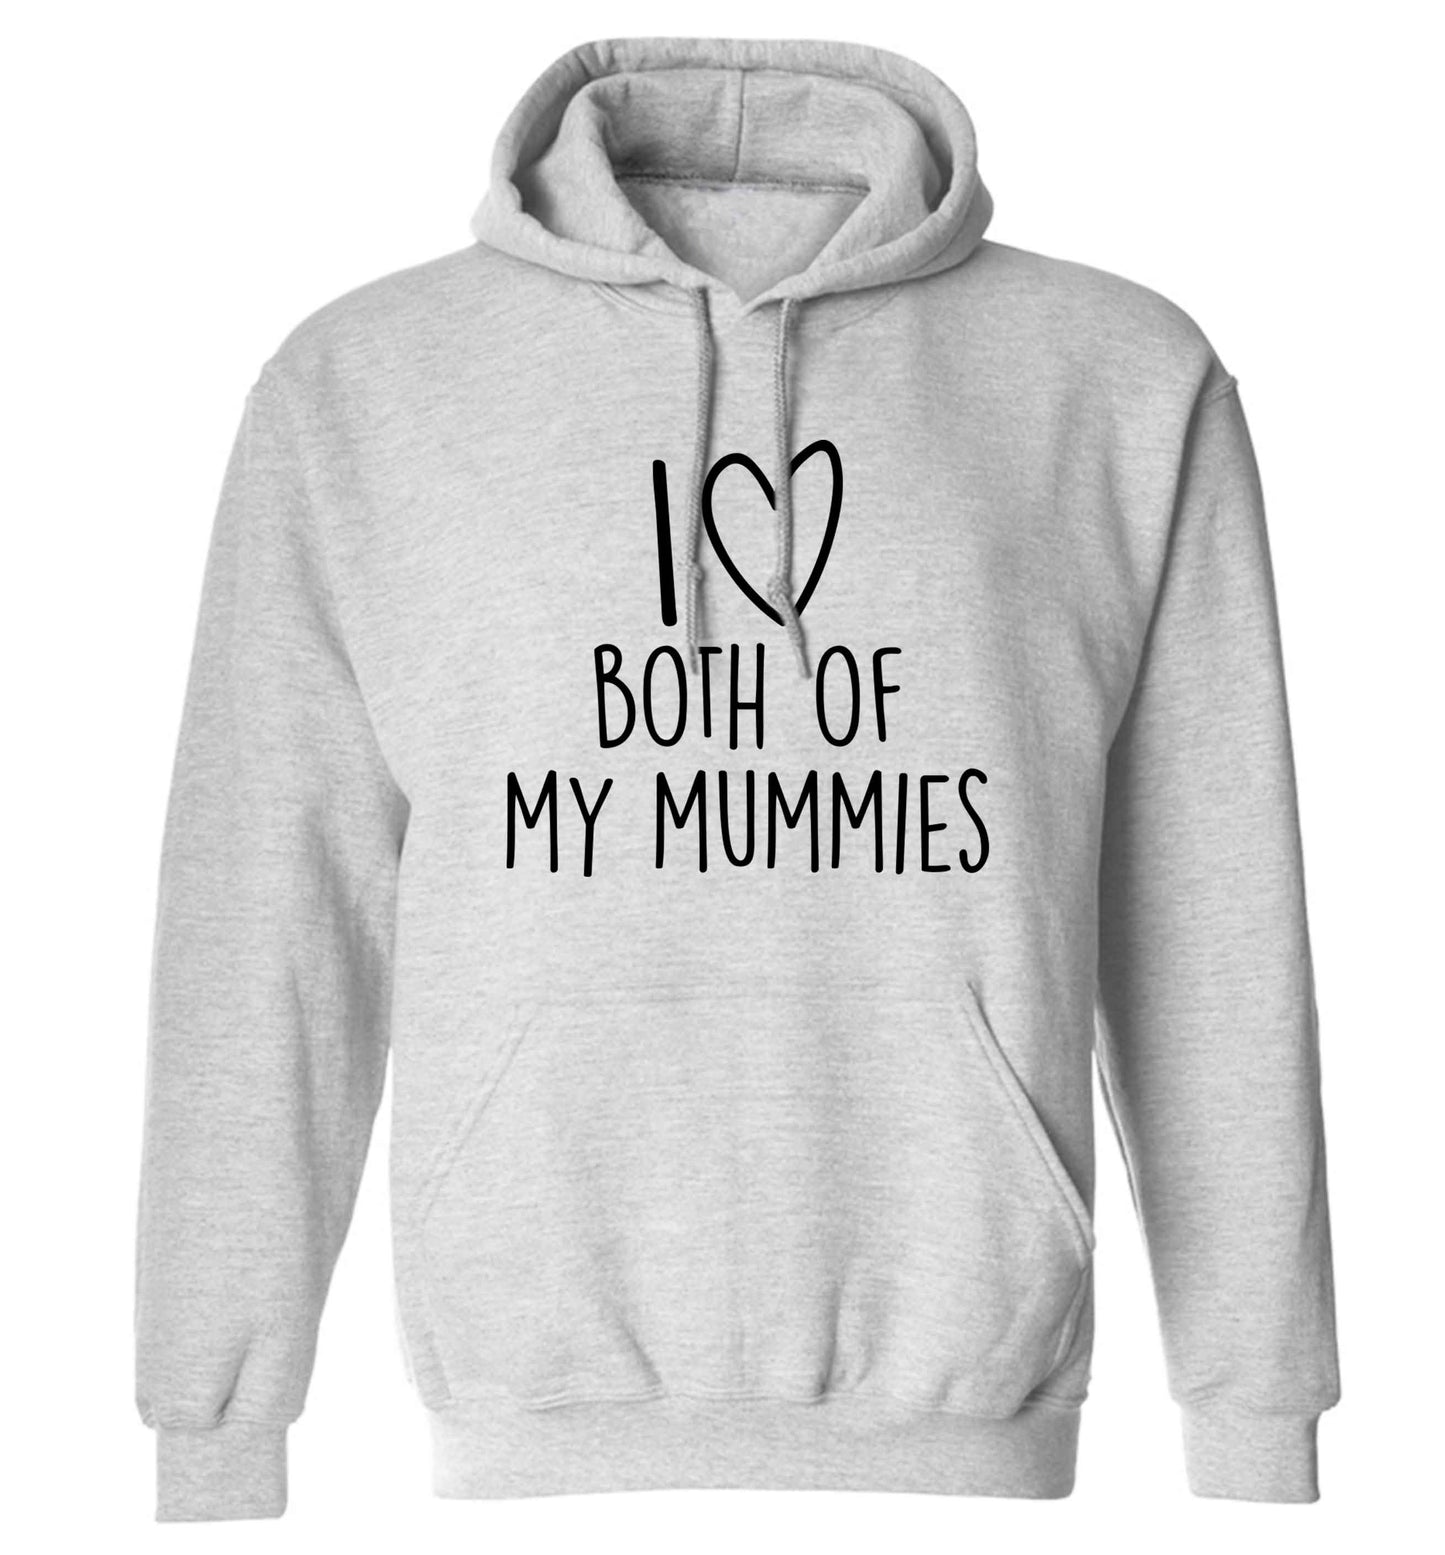 I love both of my mummies adults unisex grey hoodie 2XL